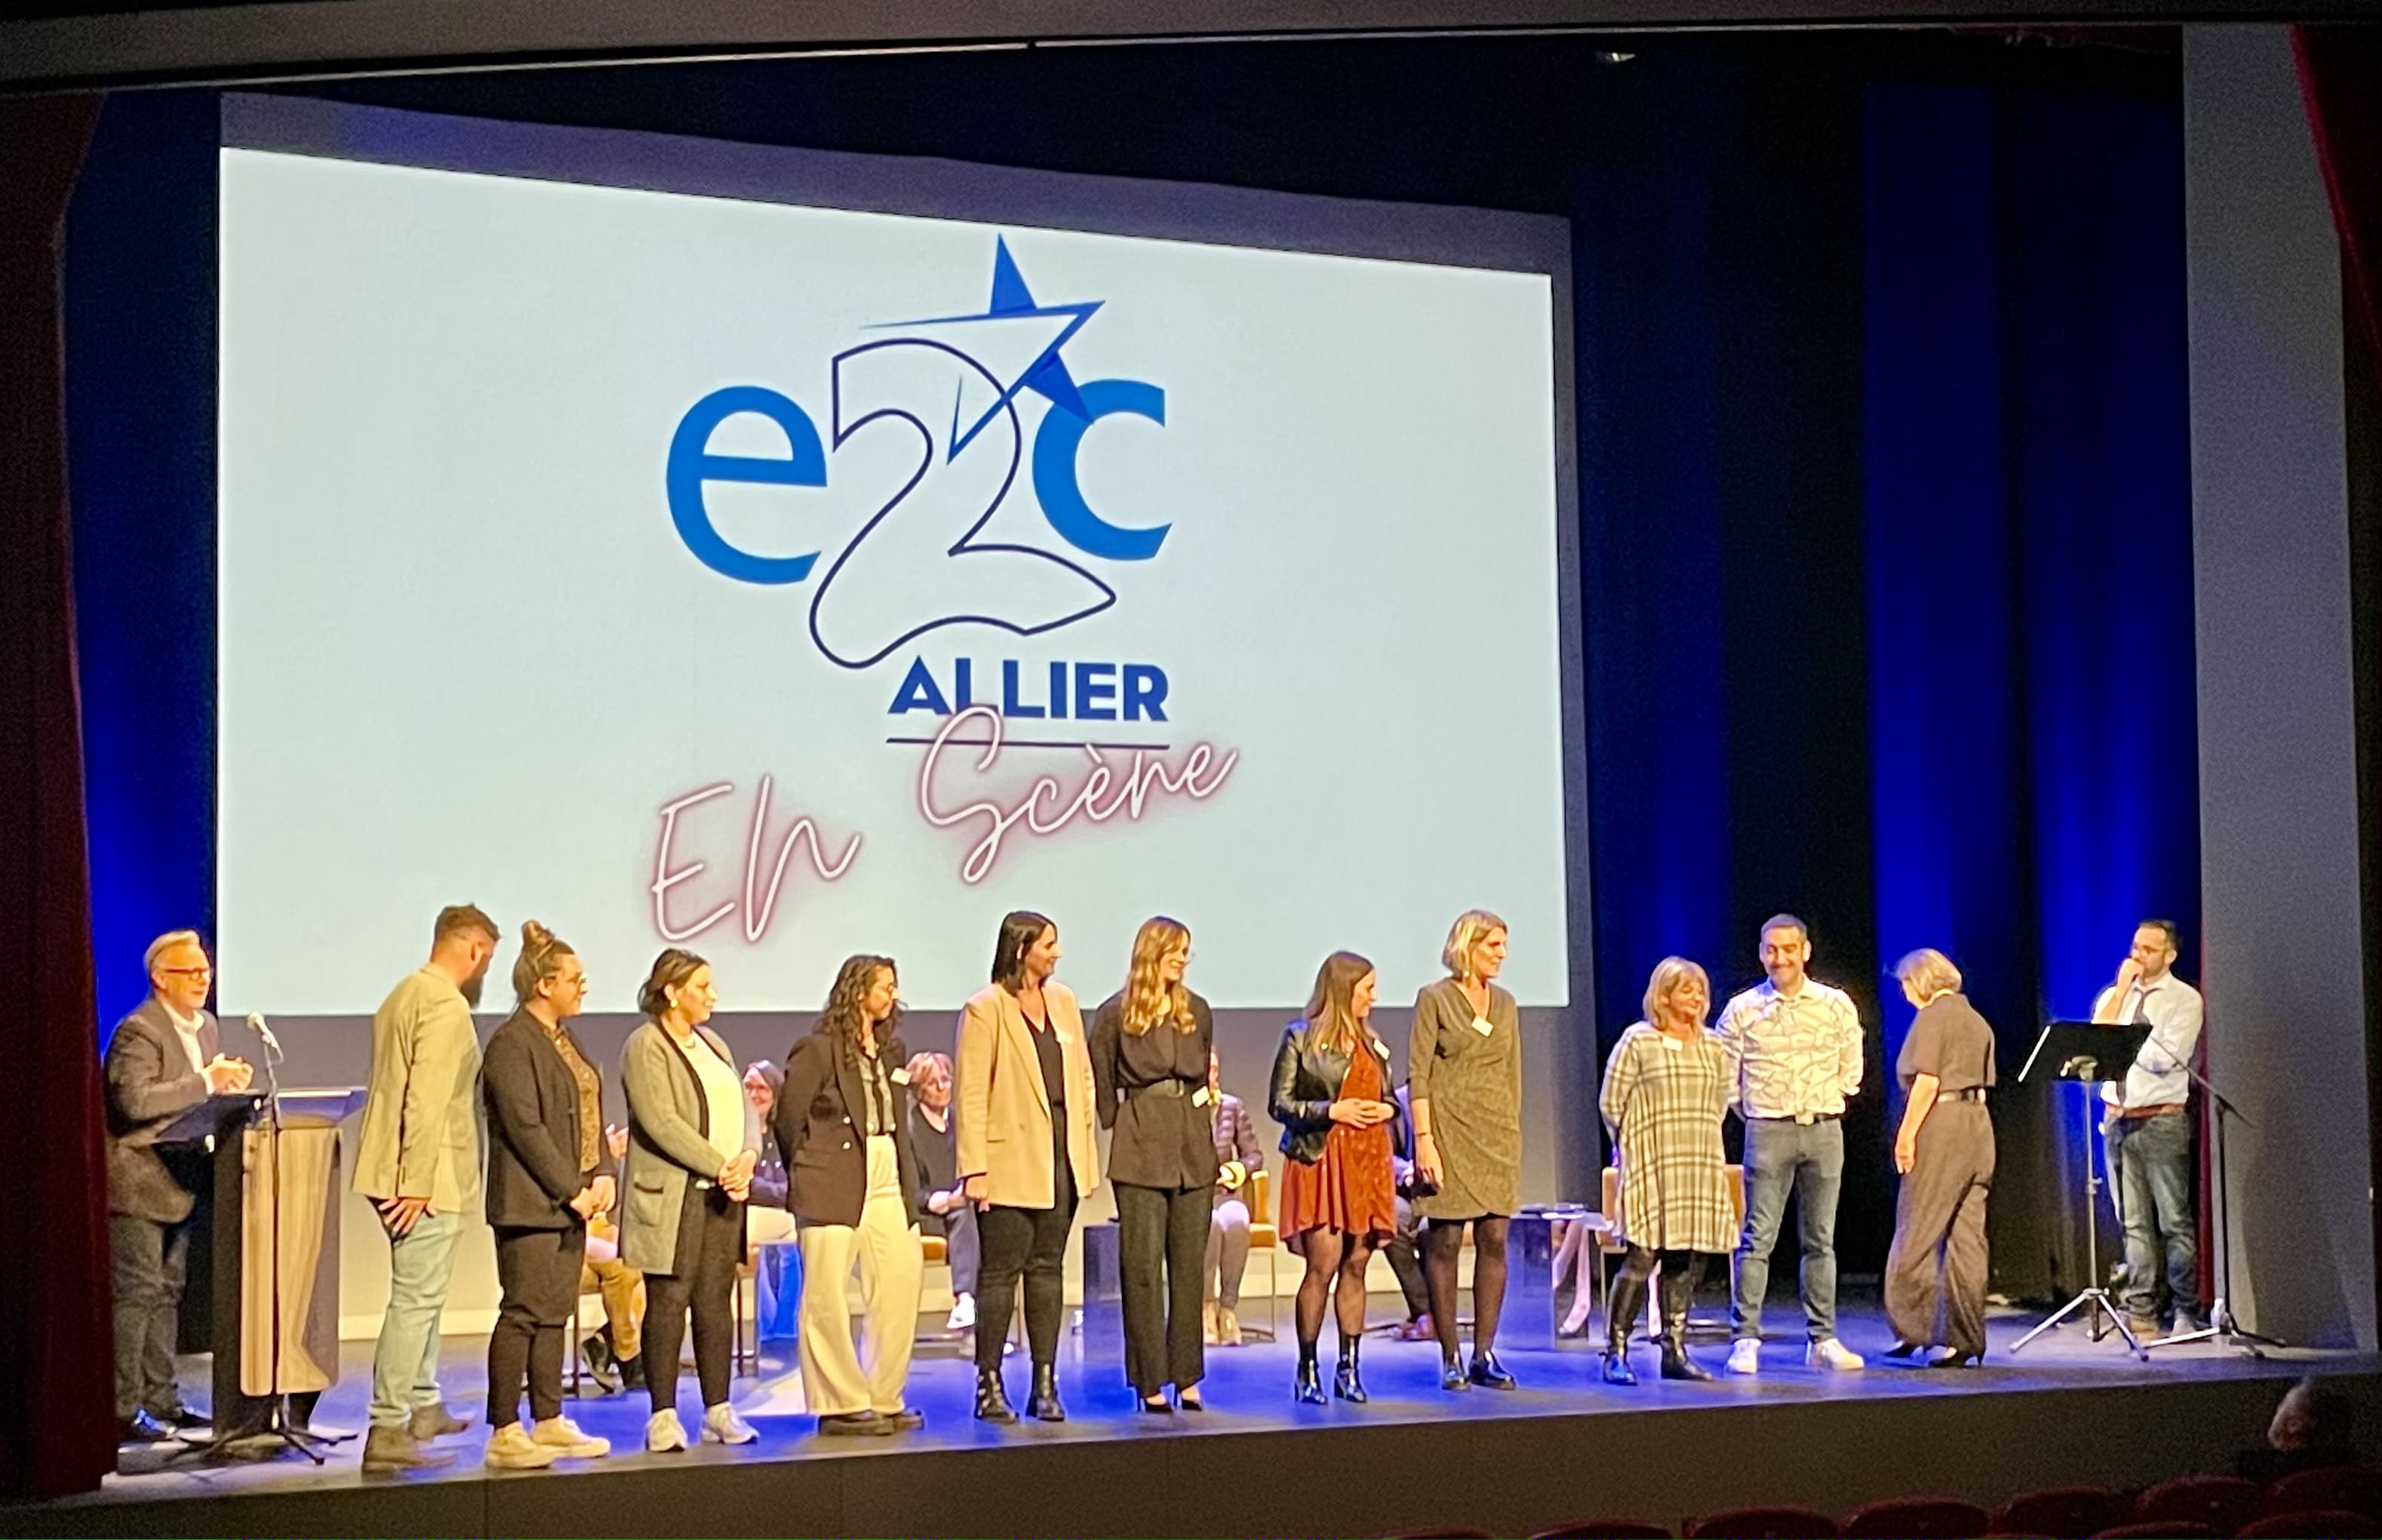 E2C Allier Equipe